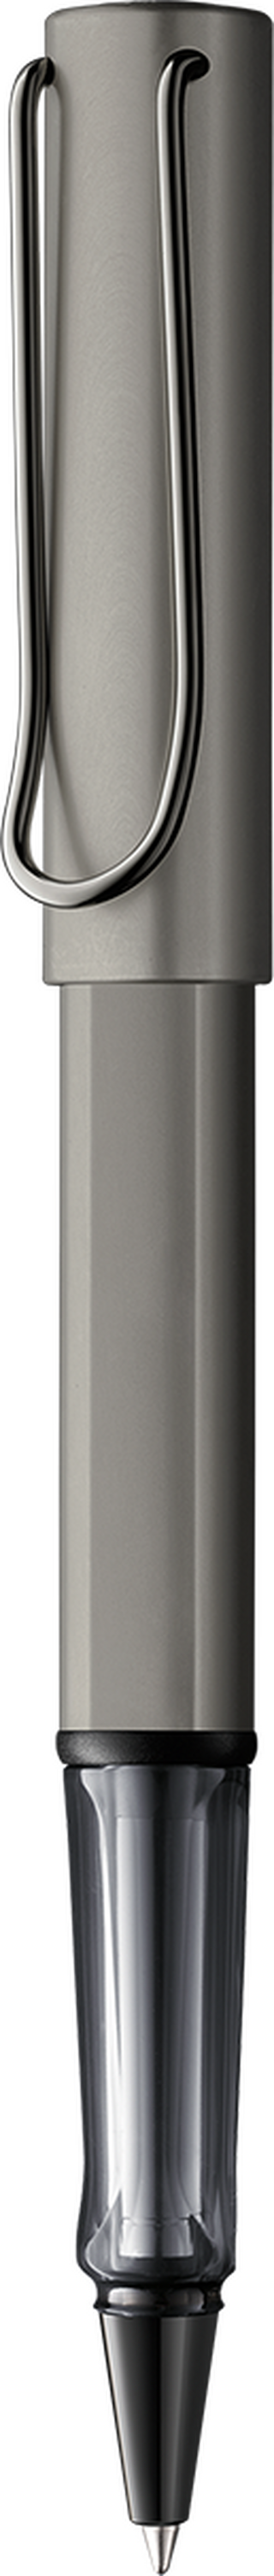 Tintenroller LAMY Lx ruthenium M-schwarz